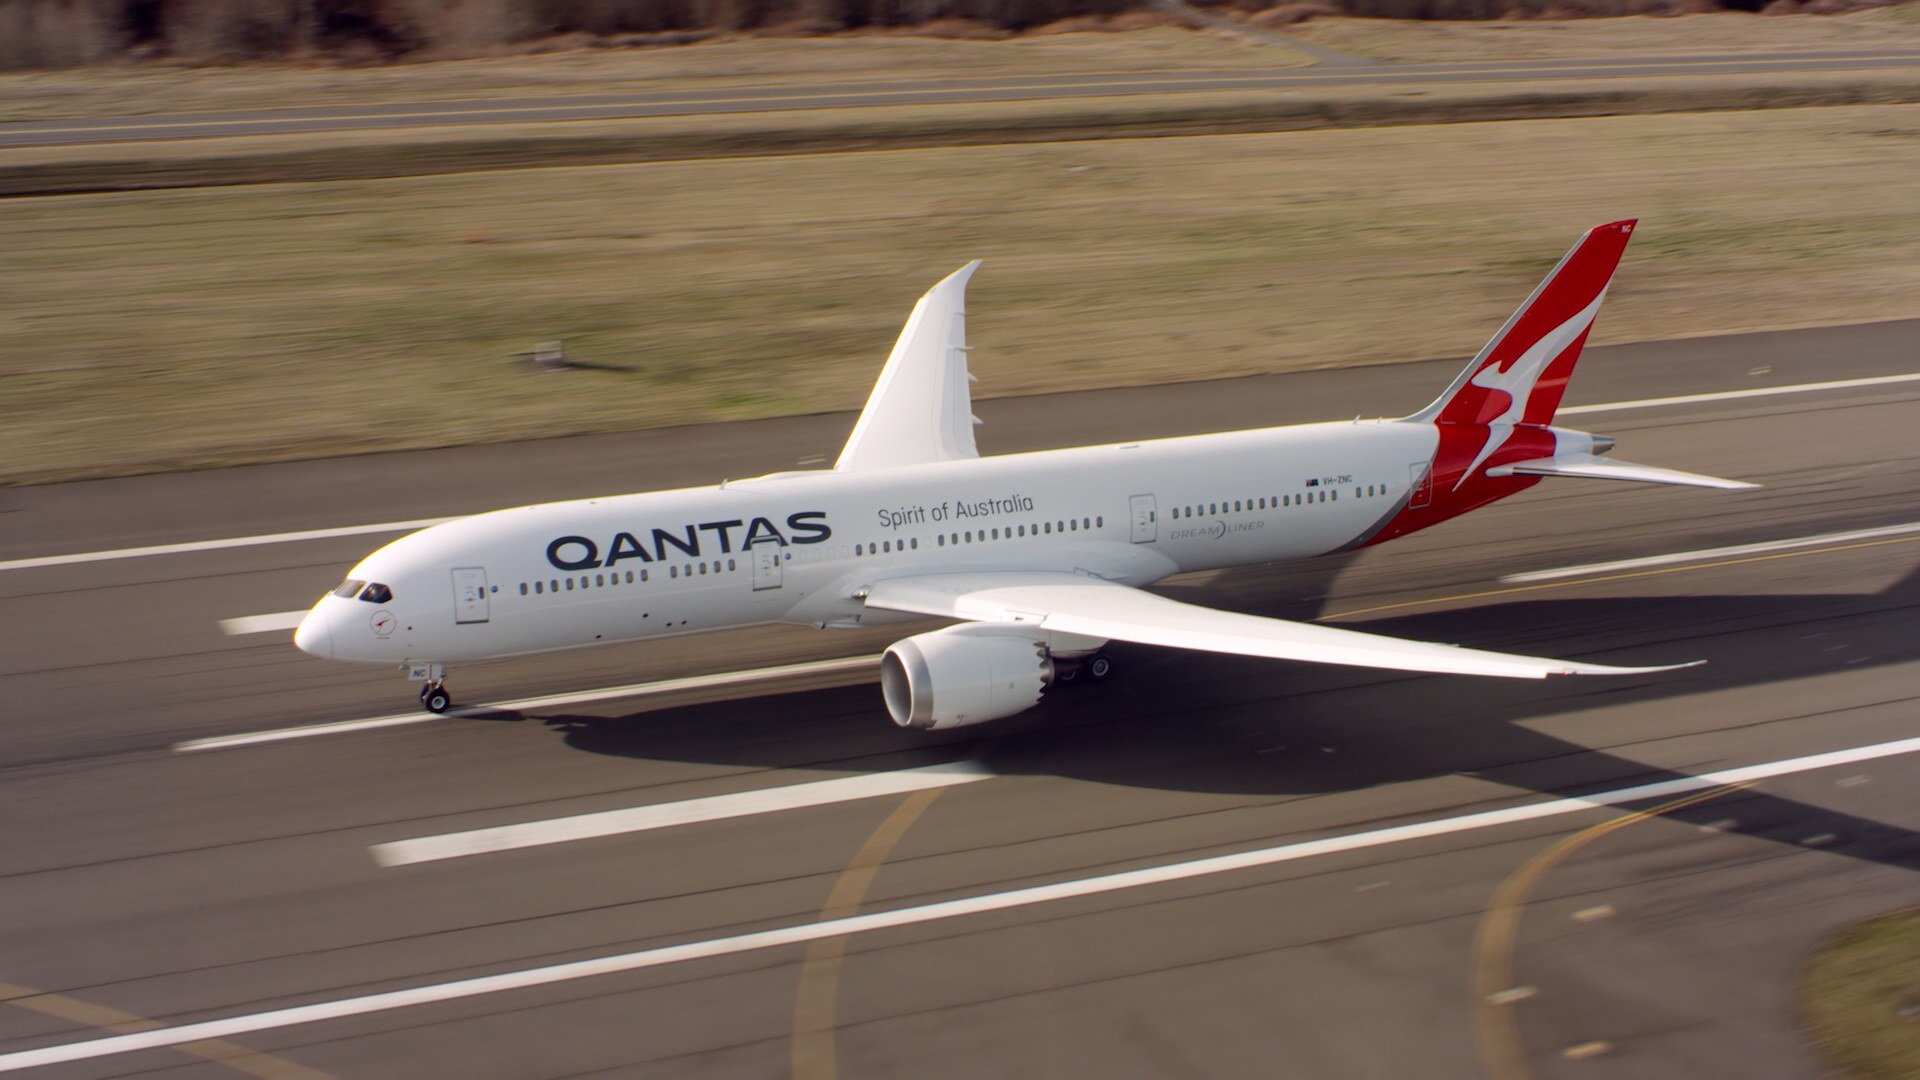 More information about "19 ώρες και 16 λεπτά, η πλέον πολύωρη πτήση στις αερομεταφορές. Νέα Υόρκη – Σίδνει από την Qantas χωρίς ανεφοδιασμό"